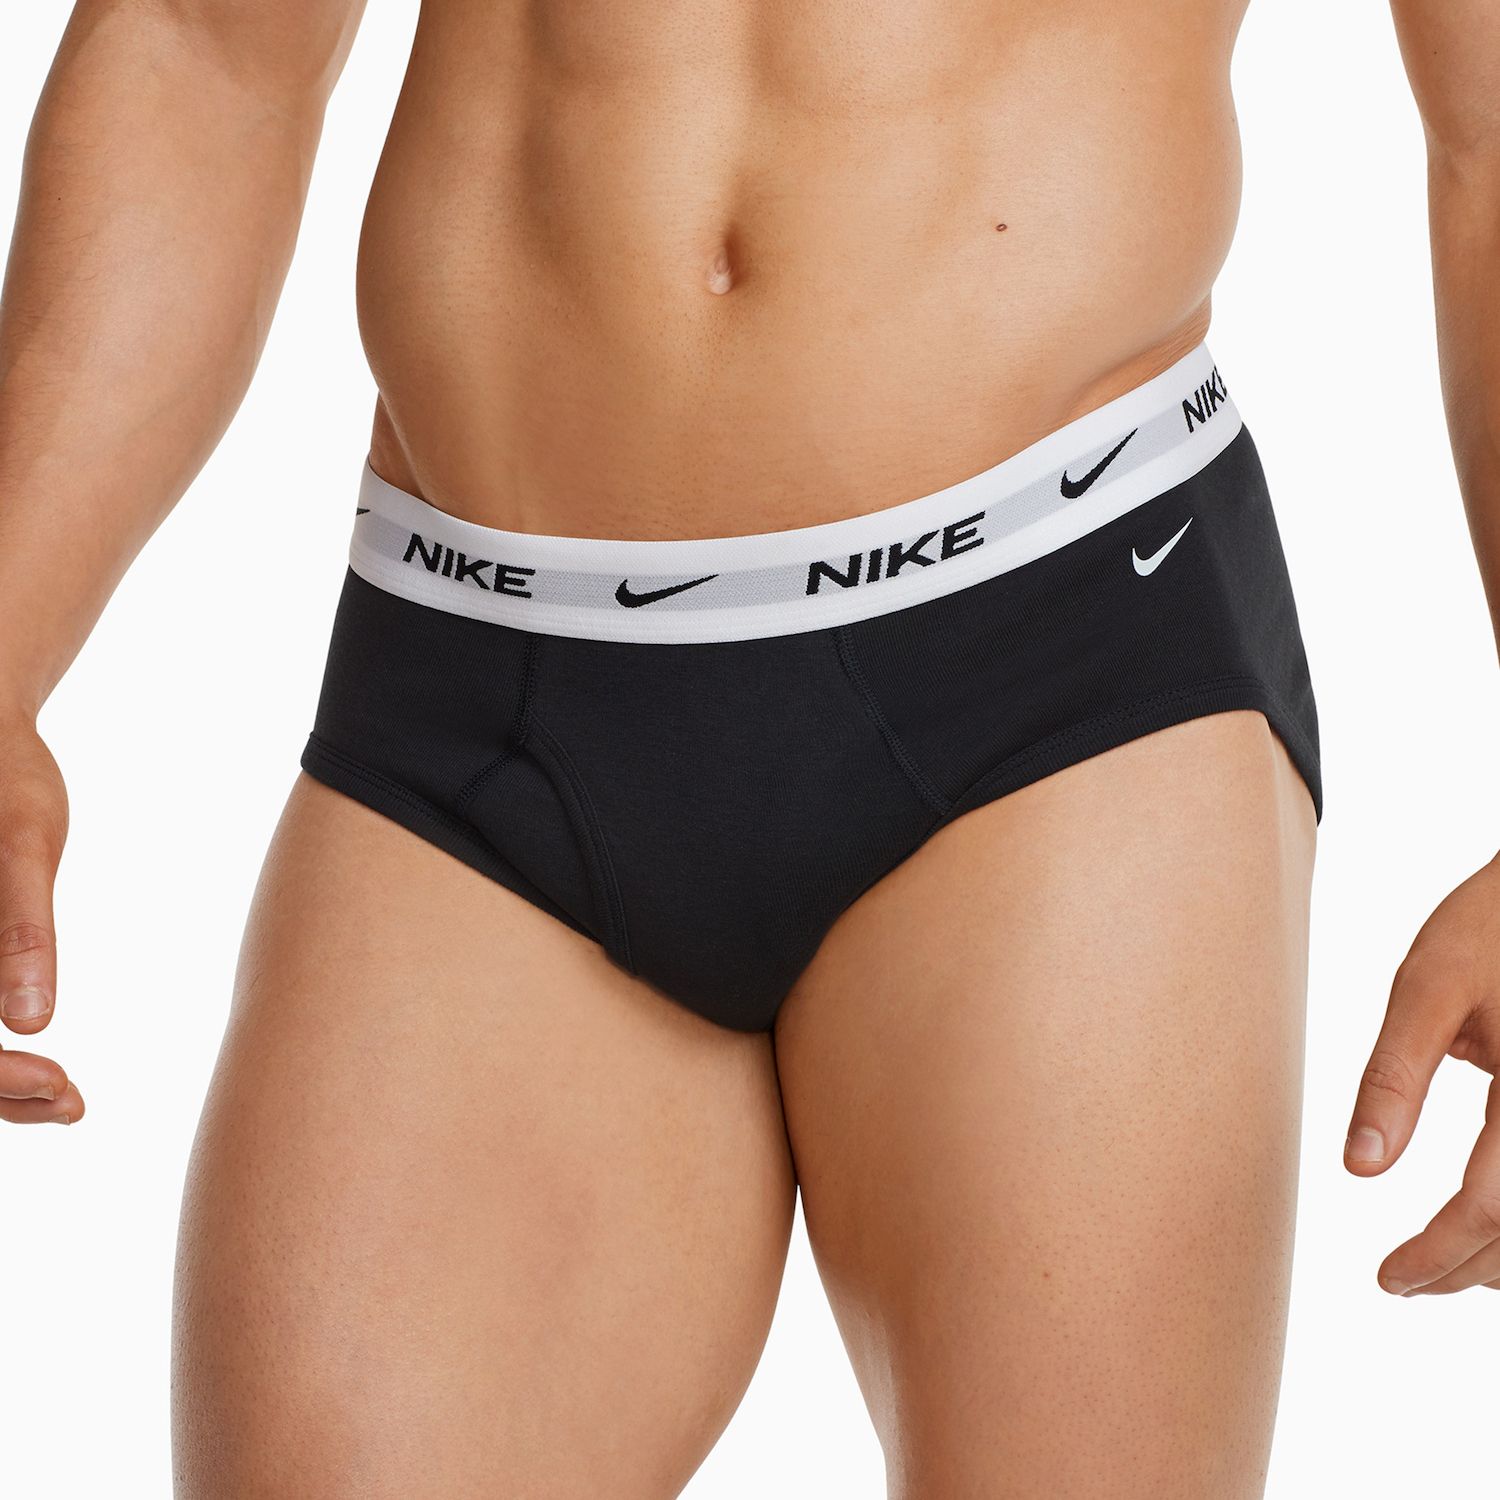 nike performance underwear